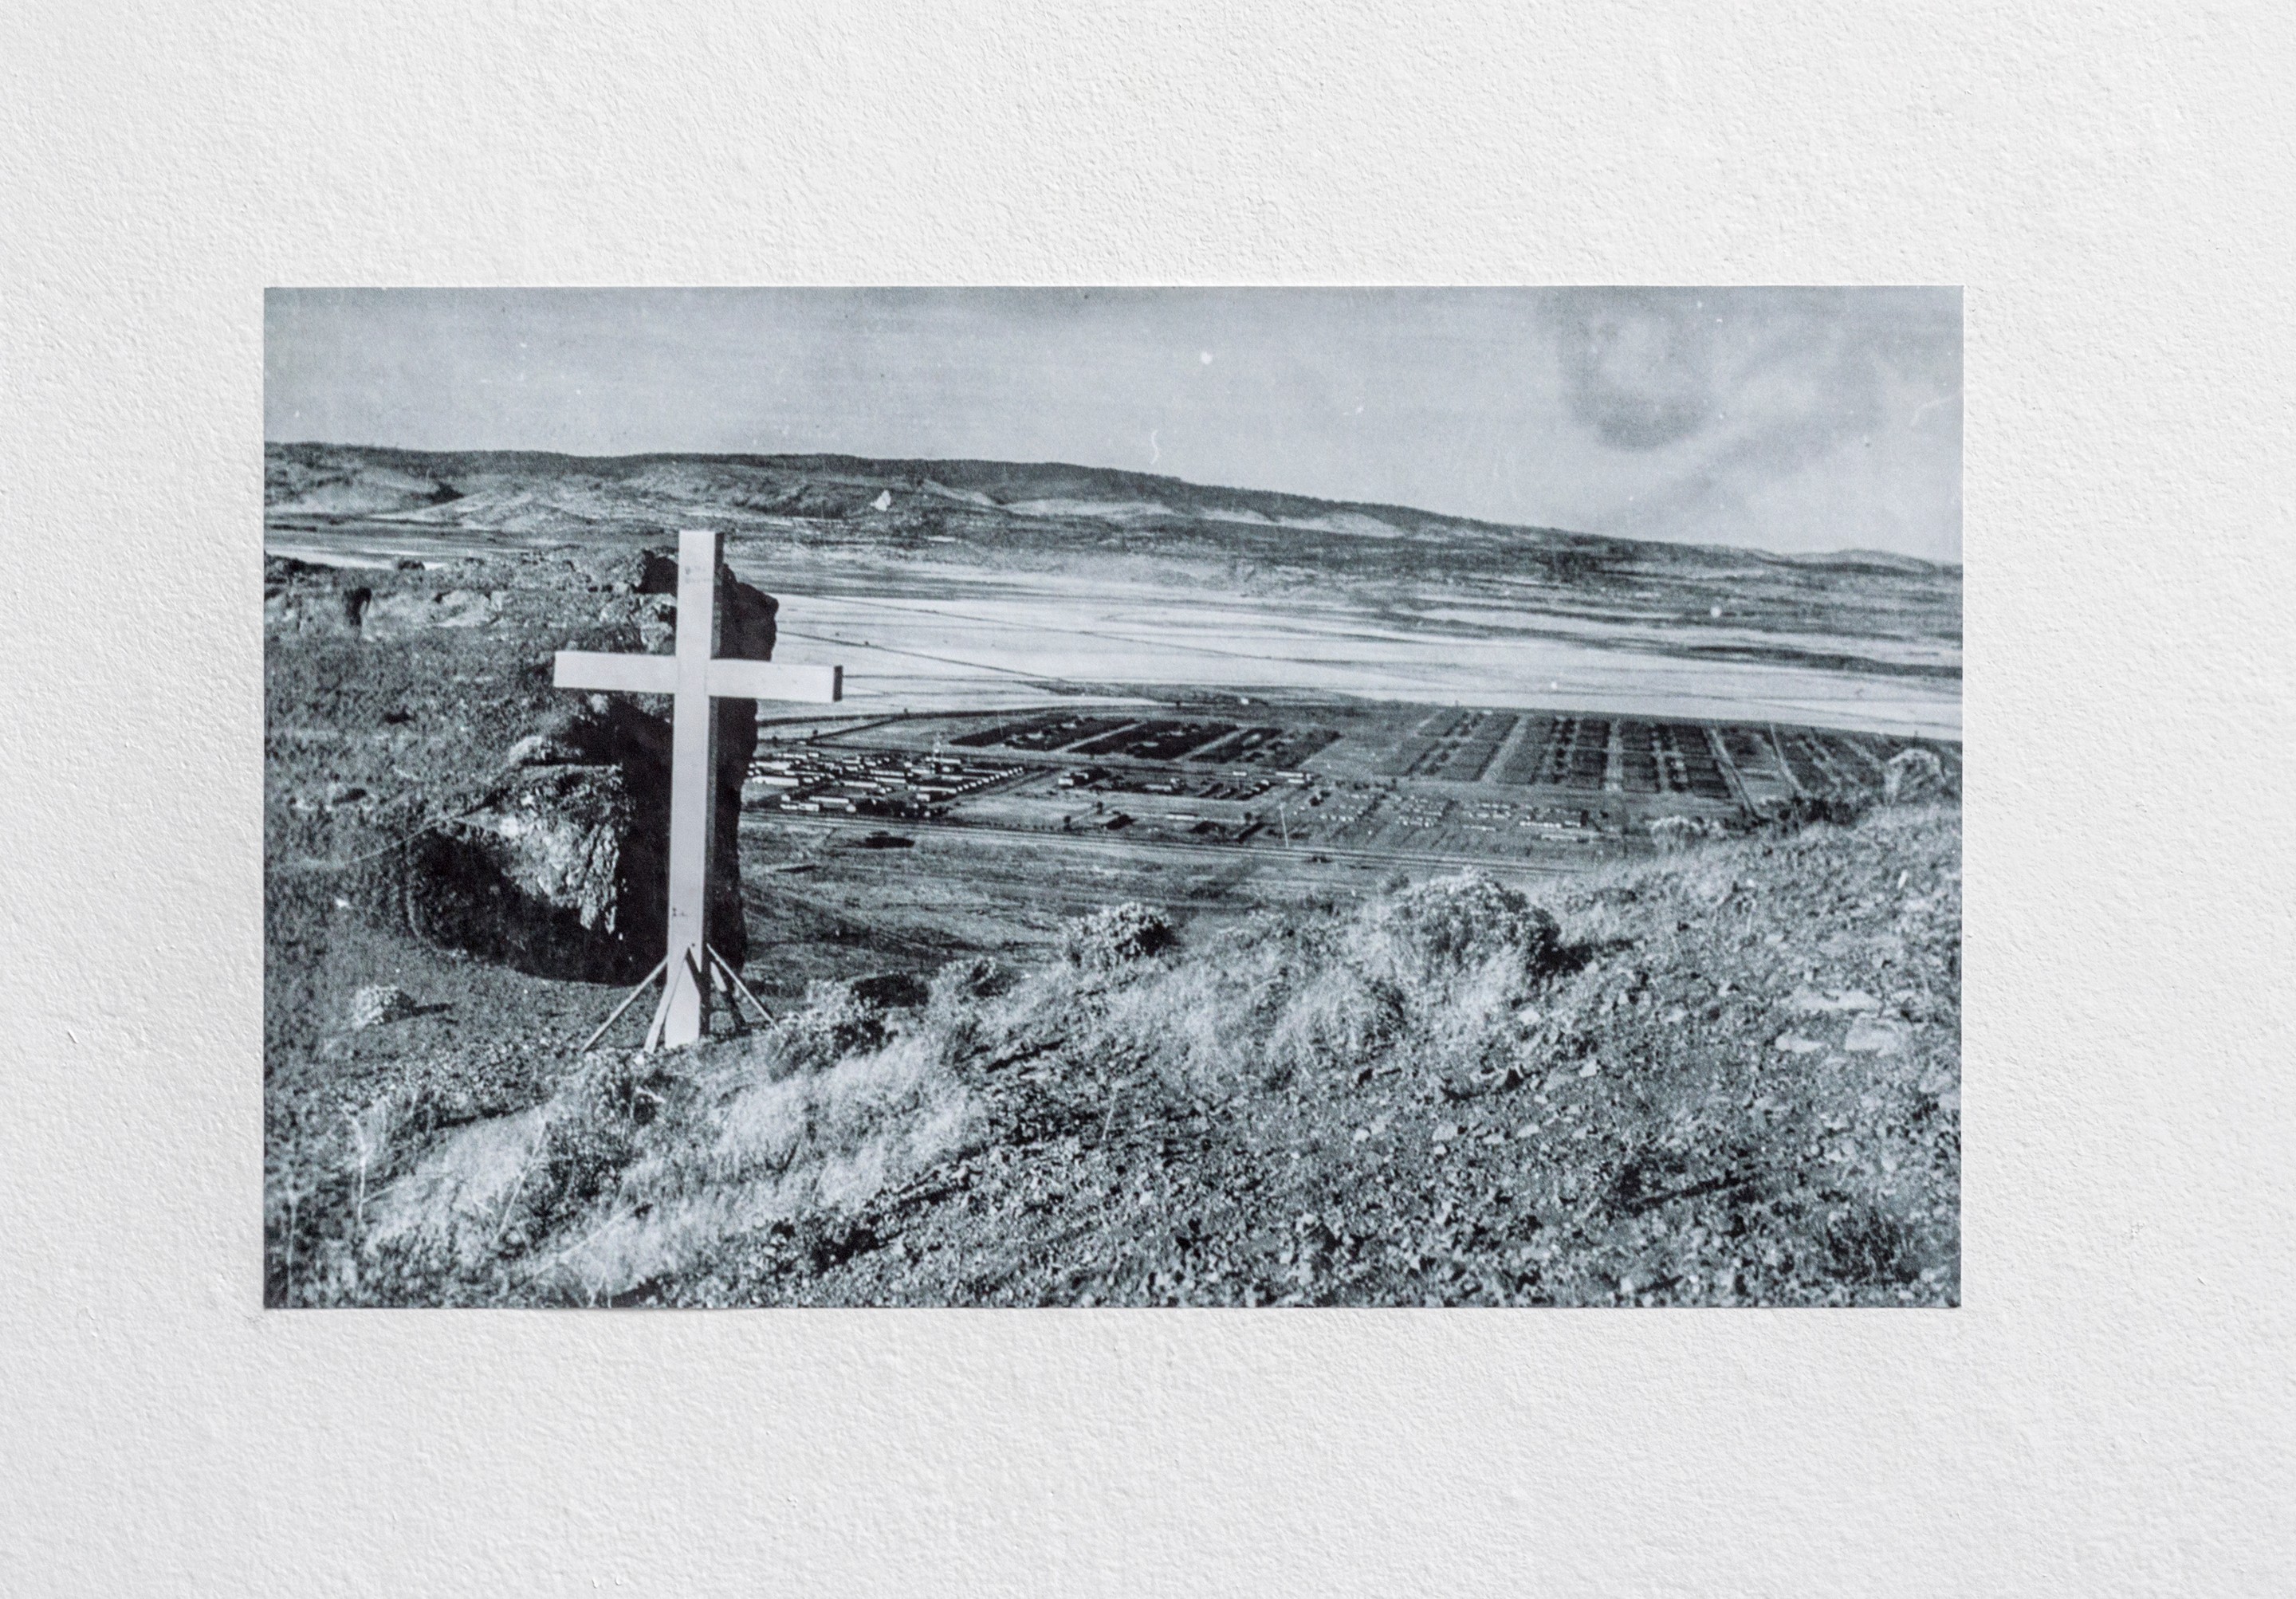 Cross Overlooking Tule Lake (Tule Lake Pilgramage) (2019)
Print on vinyl. 

6.75h x 10.75w inches